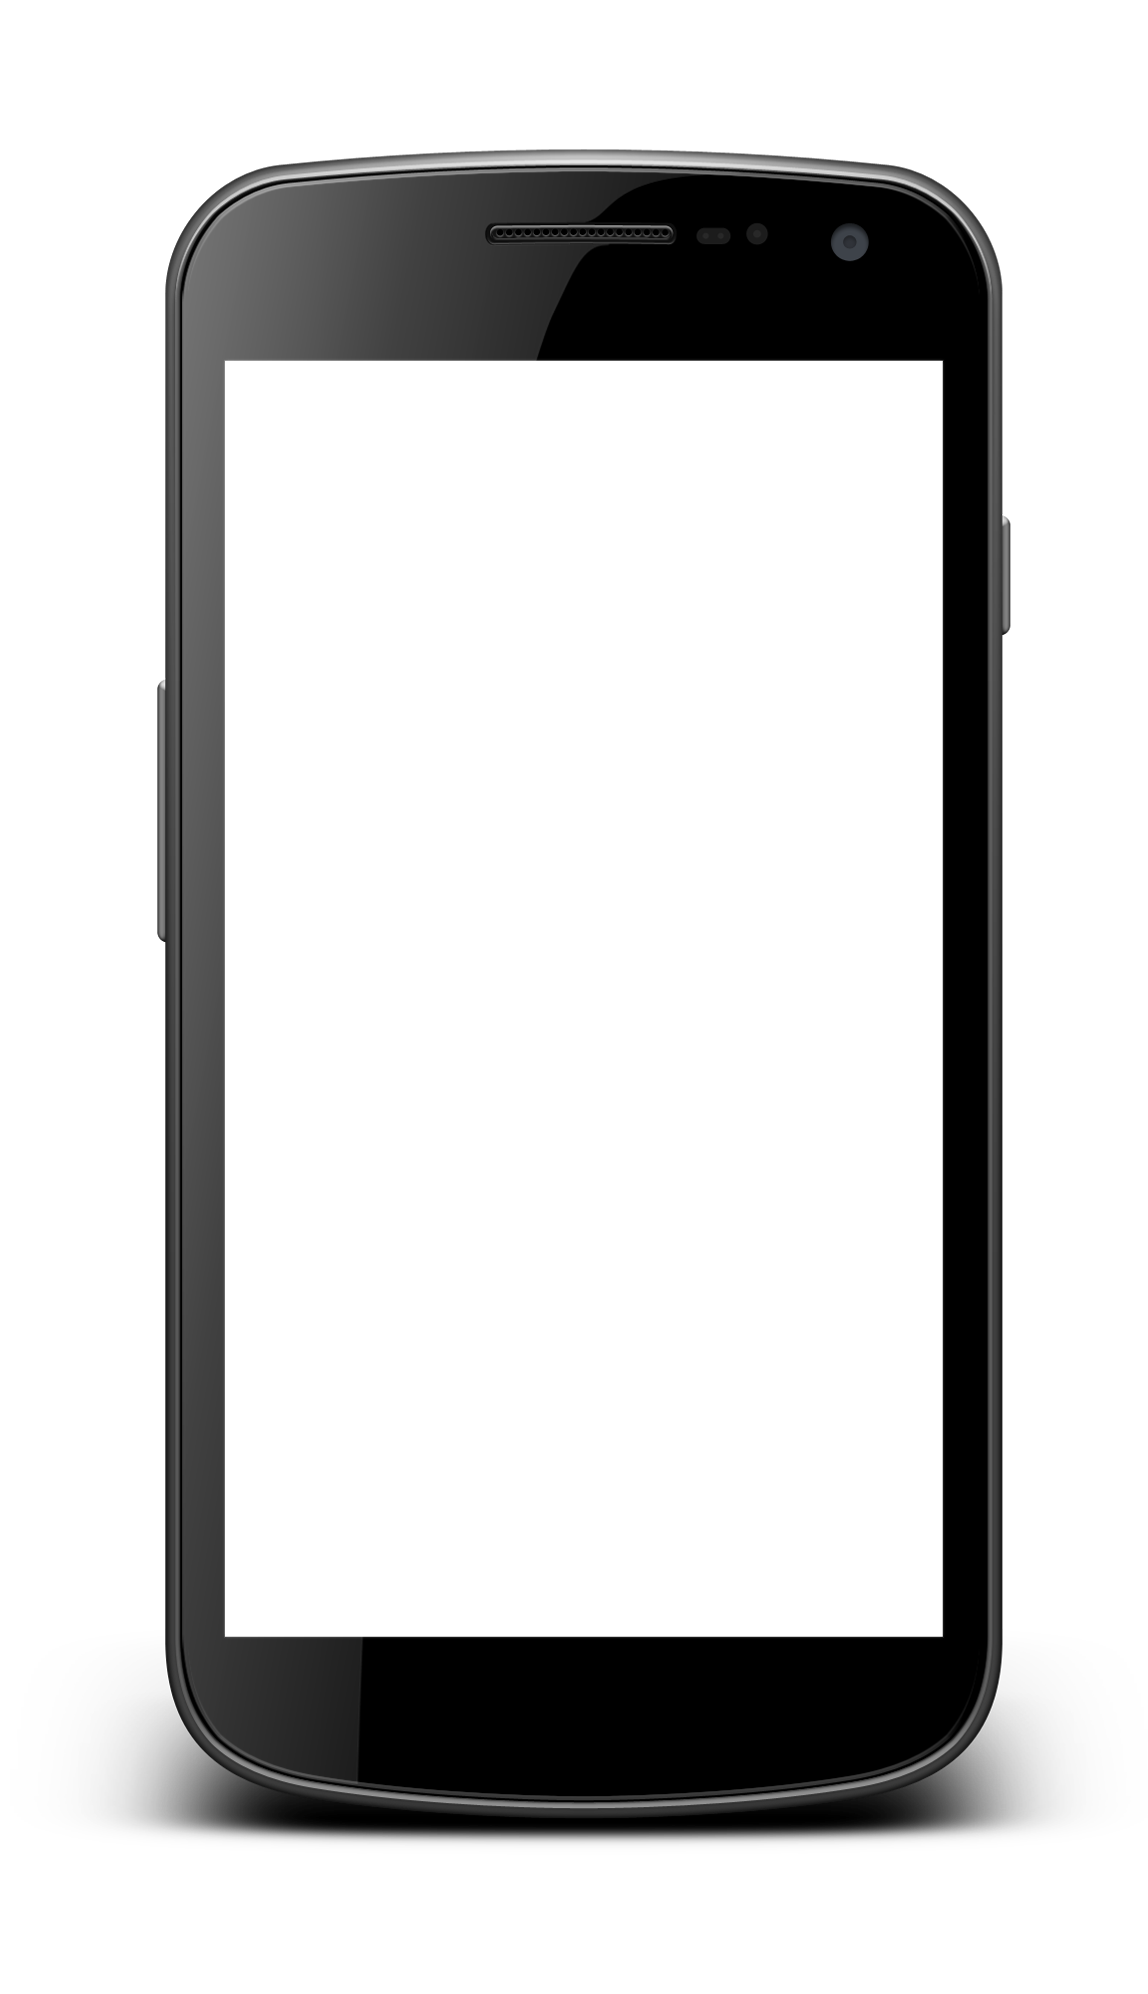 Template Galaxy Nexus